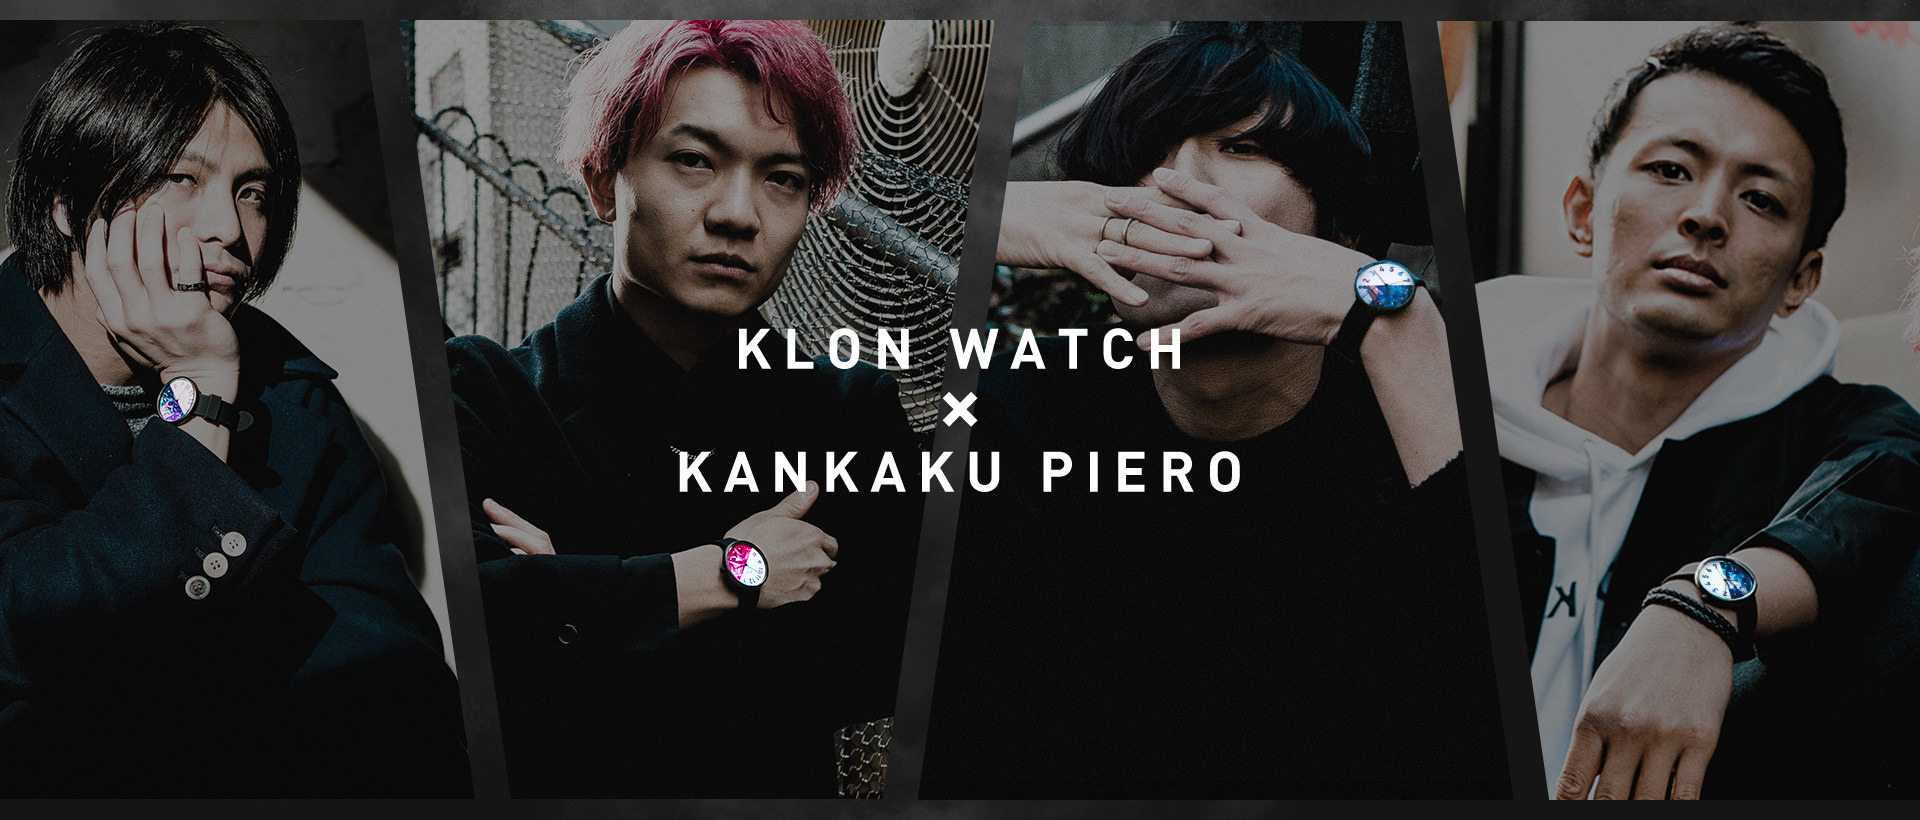 『KLON×KANKAKU PIERO』異色のコラボウォッチが
2020年2月5日より発売開始！
感覚ピエロサイン入りTシャツが当たるチャンス！